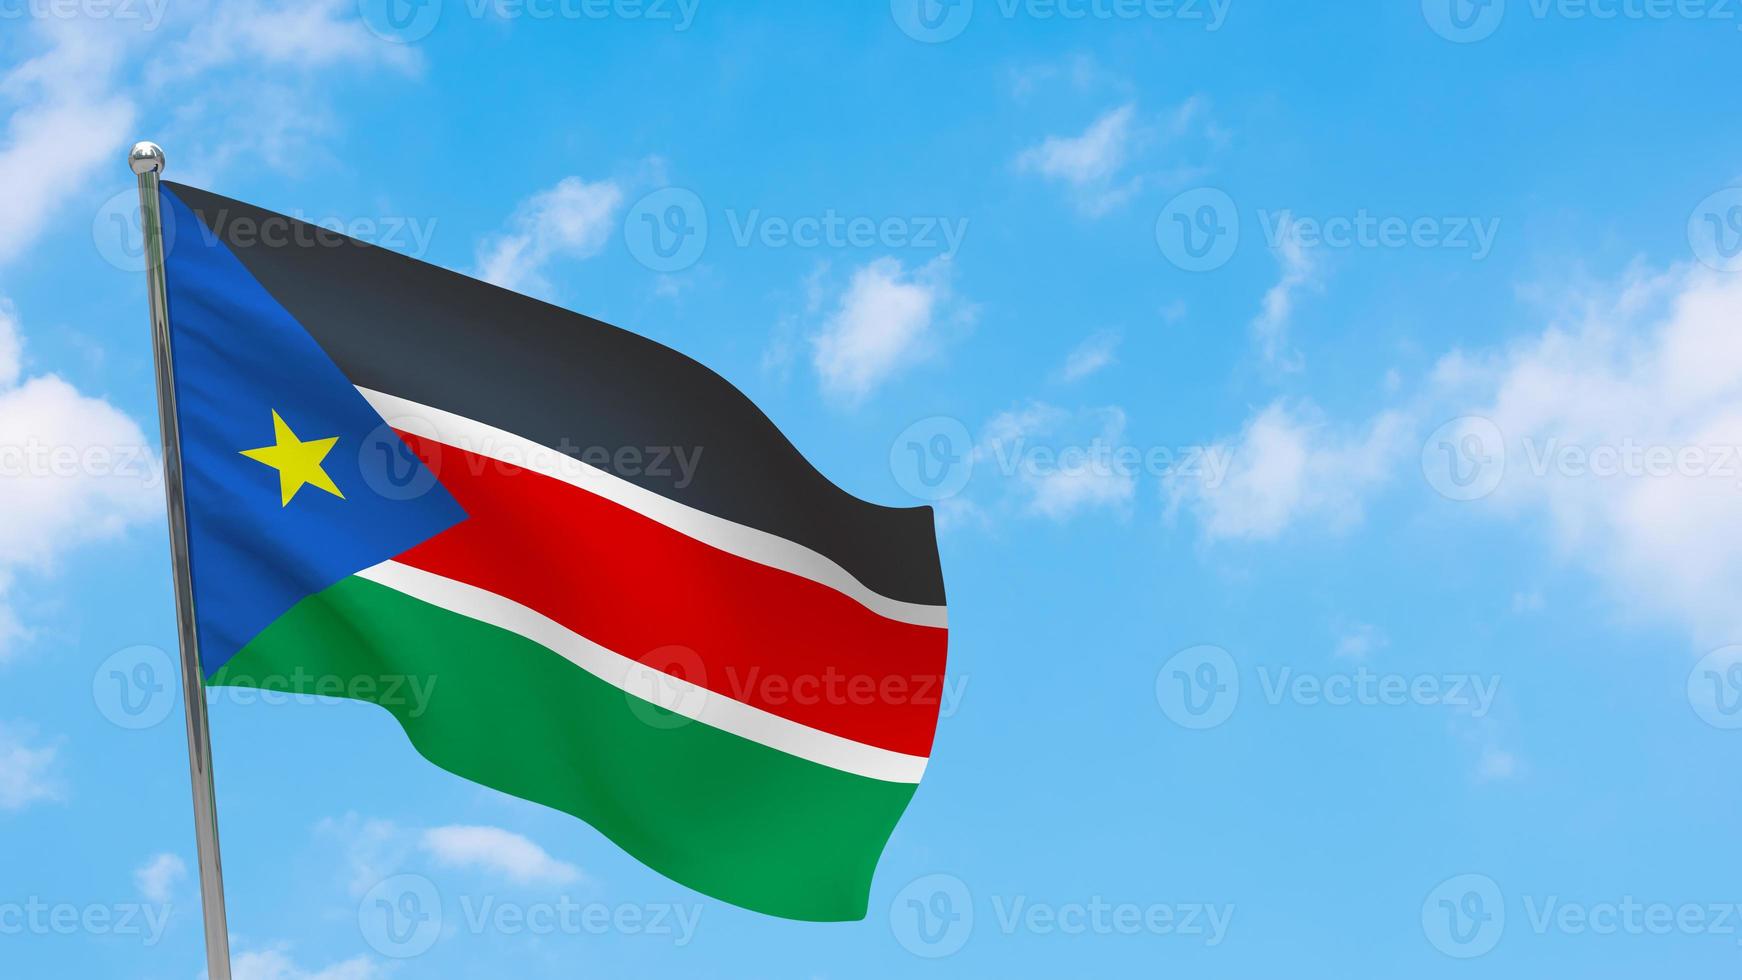 South Sudan flag on pole photo